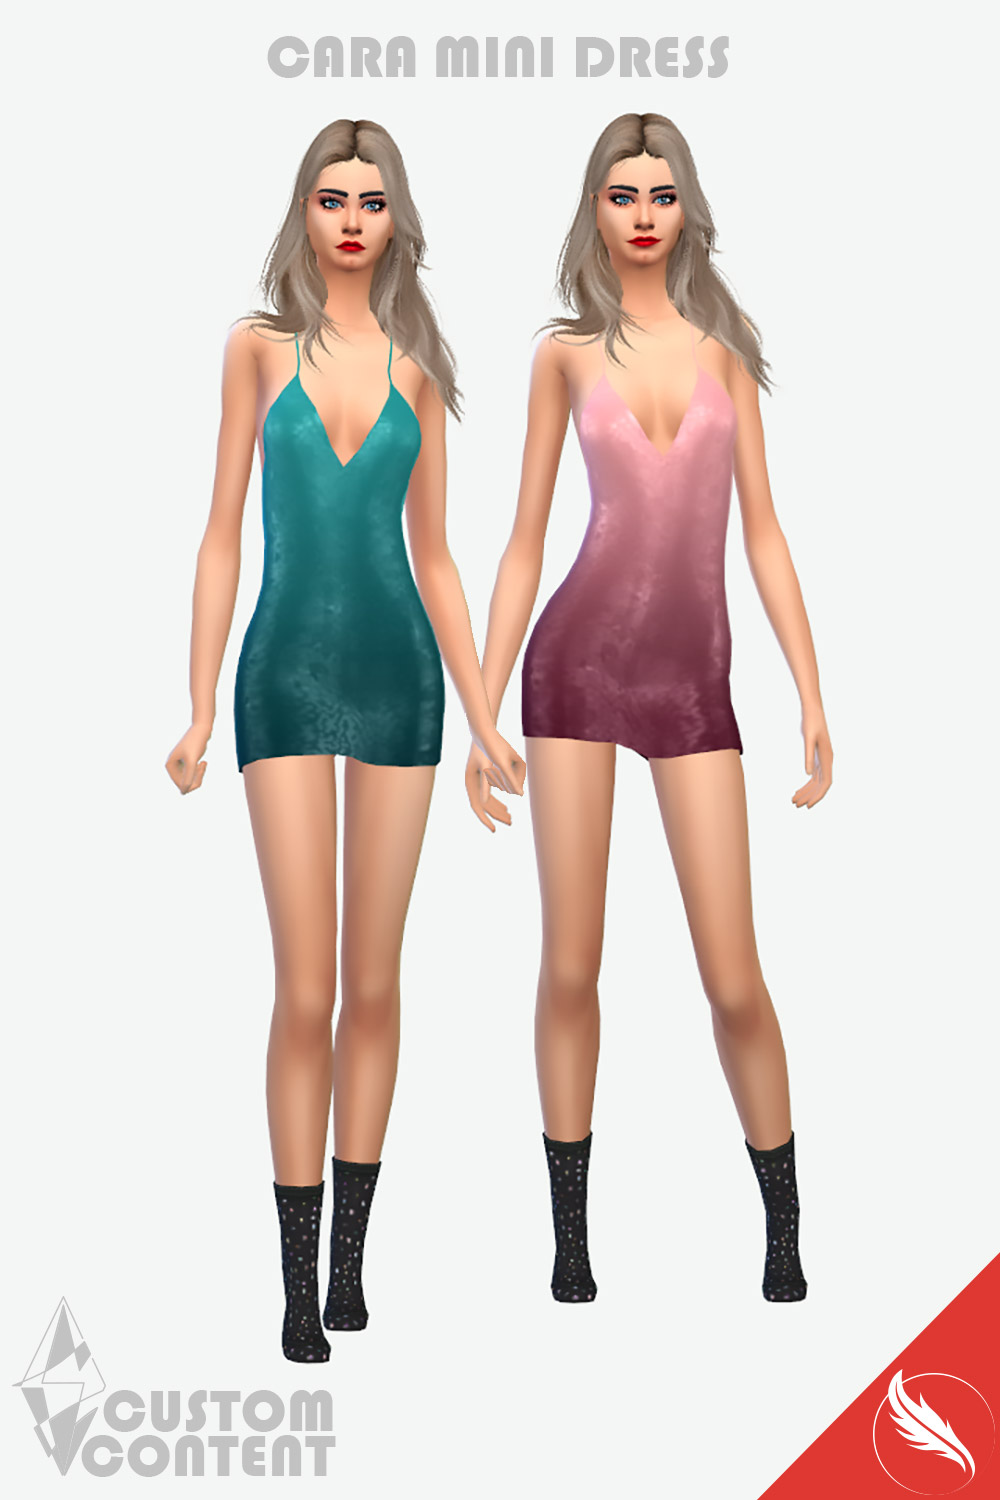 The Sims 4 Mini Dress Custom Content